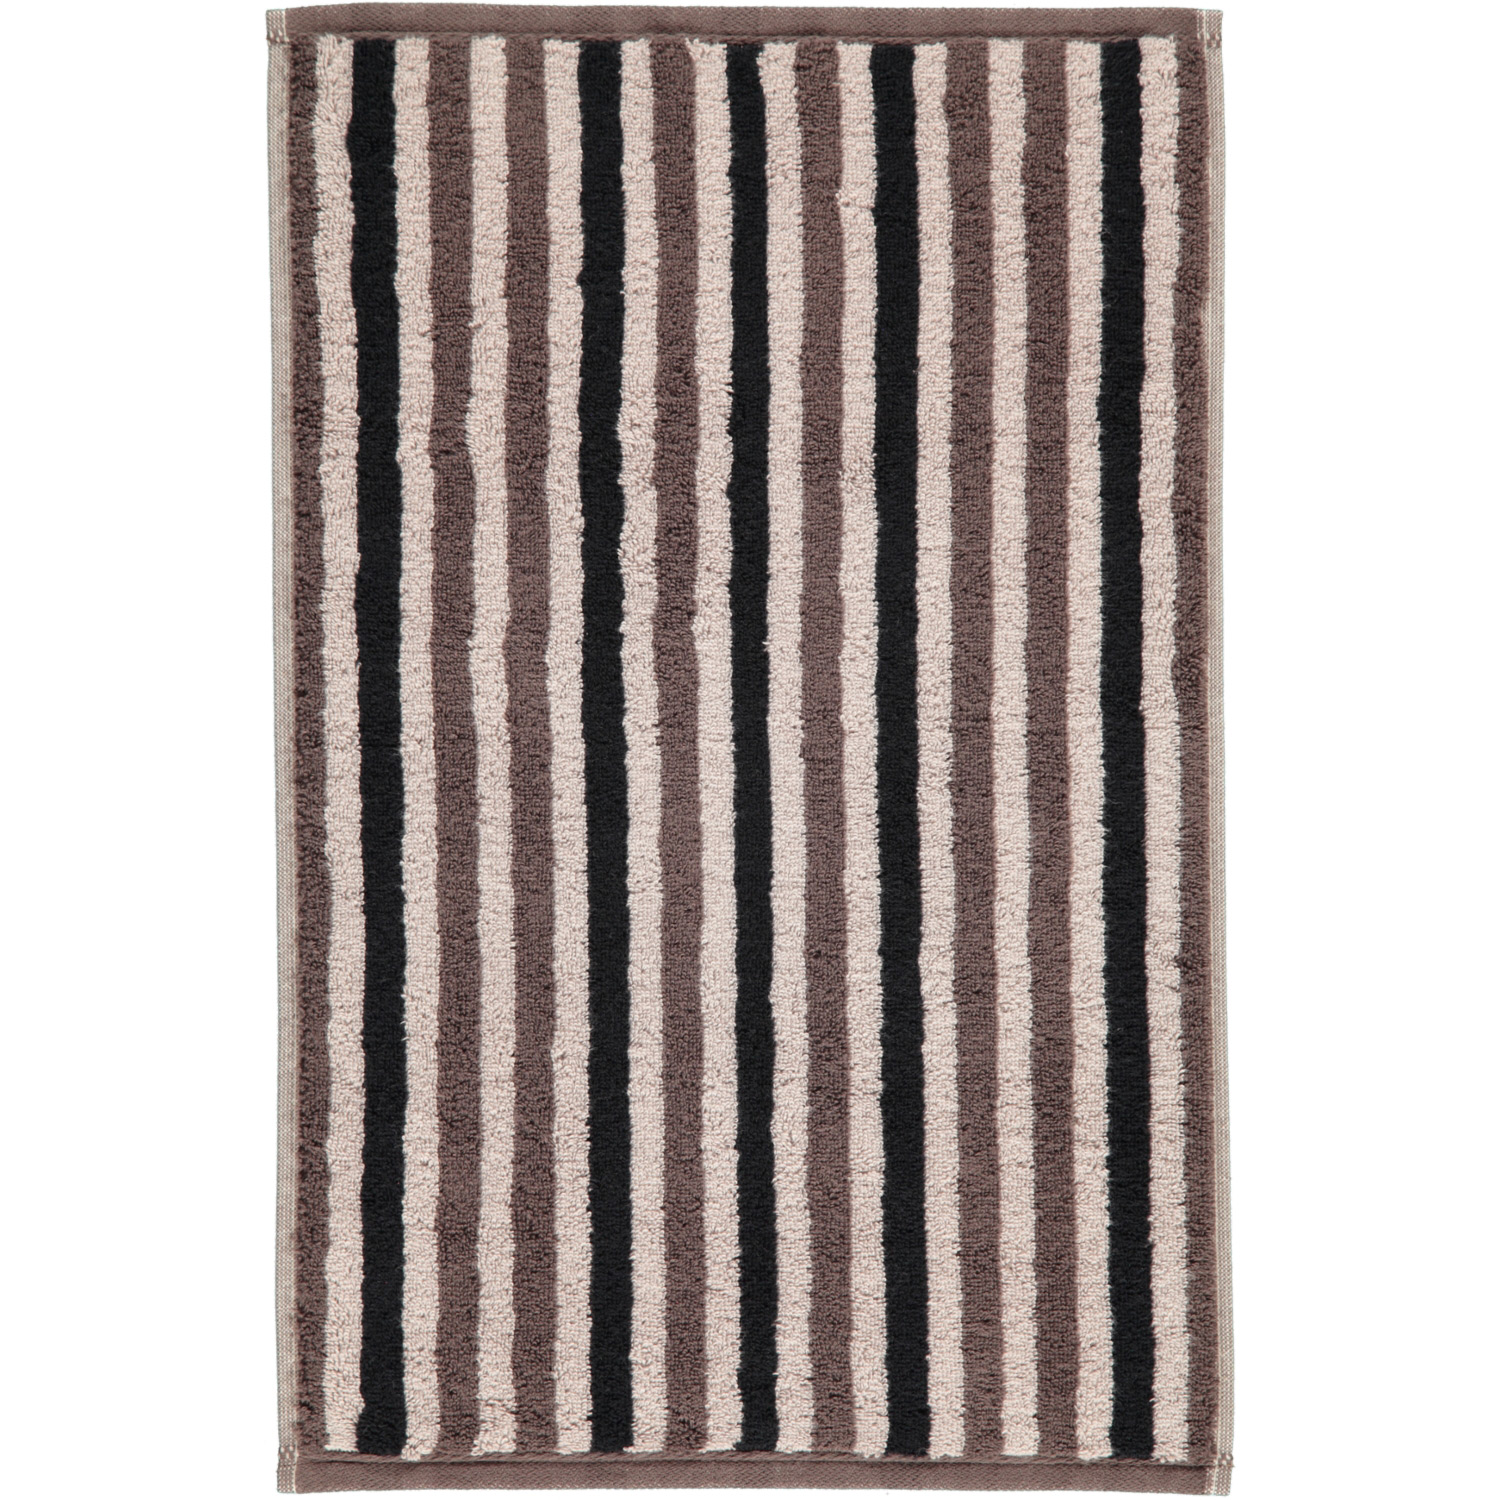 фото Полотенце cawo stripes бежевое с коричневым и чёрным 30х50 см